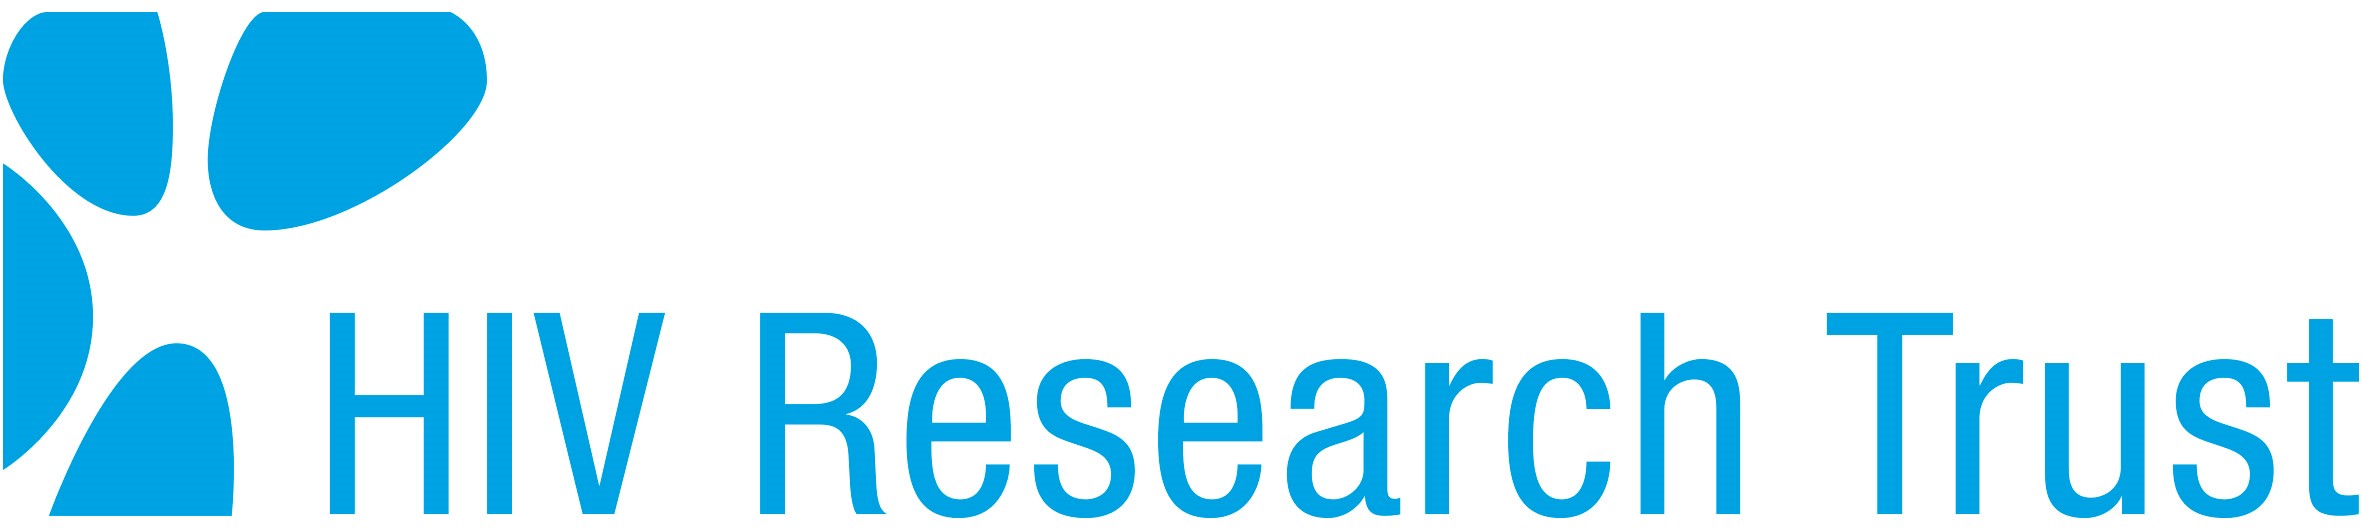 HIV Research Trust logo